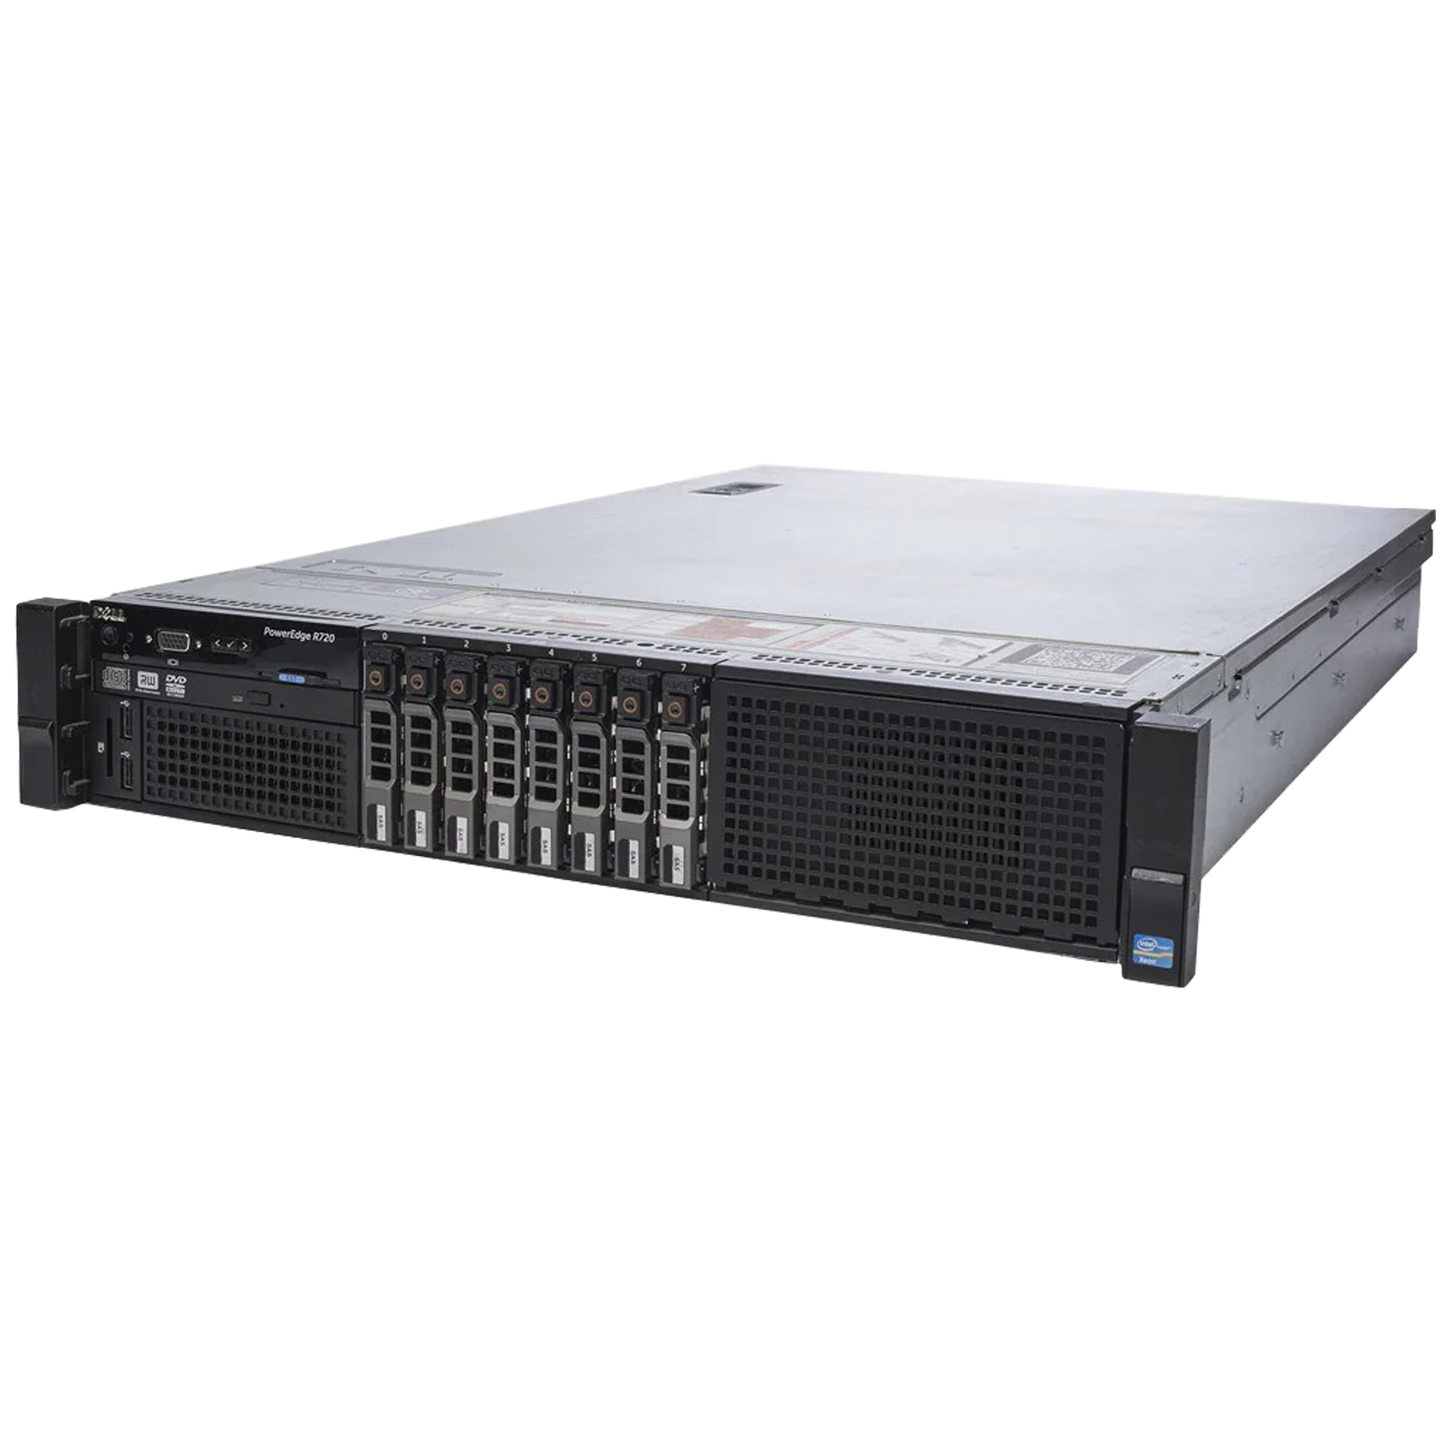 Dell PowerEdge R720 Xeon 2 x 10 Core CPU Server - 3.5" Backplane Servers